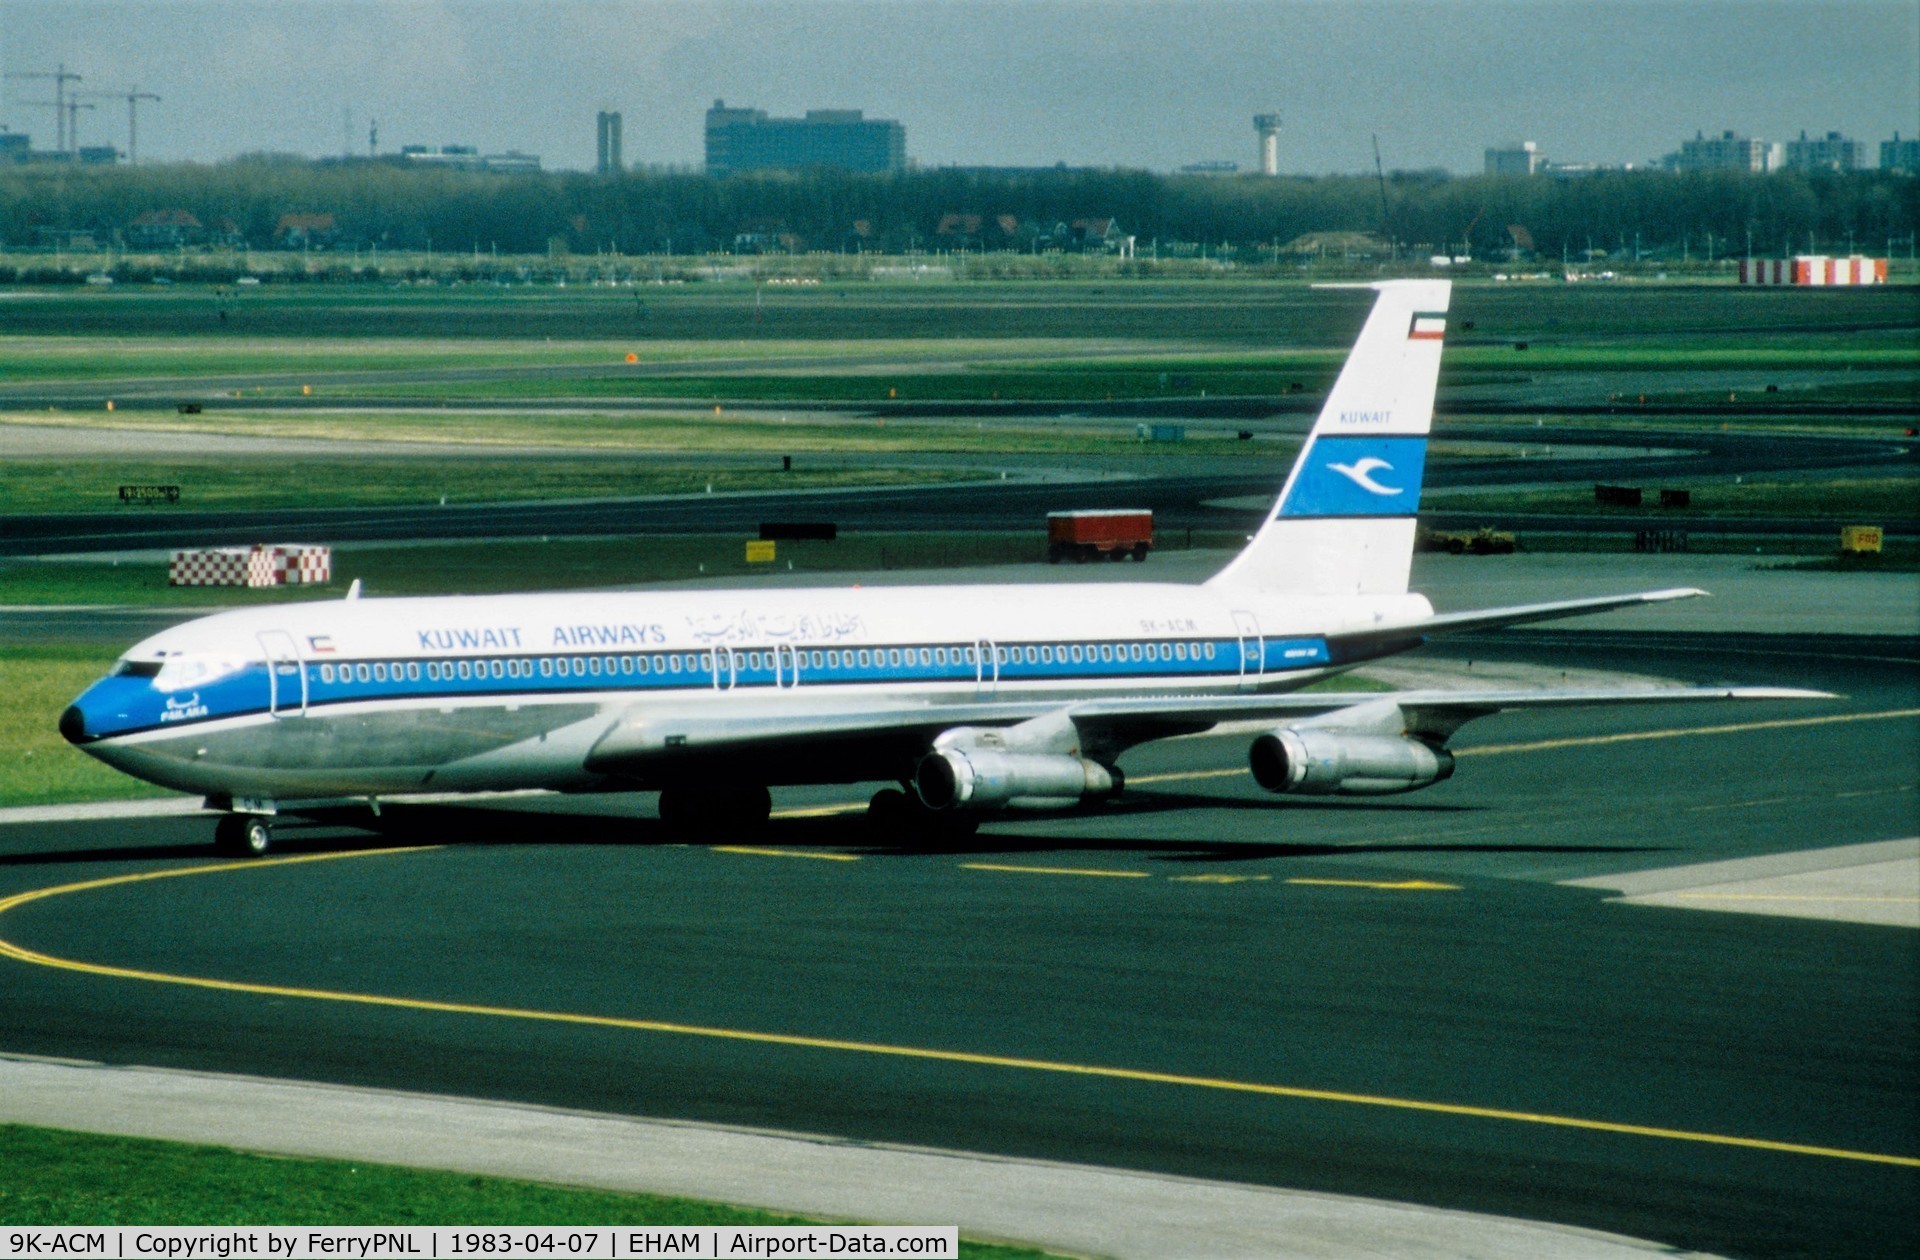 9K-ACM, 1972 Boeing 707-369C C/N 20546, Arrival of Kuwait B707